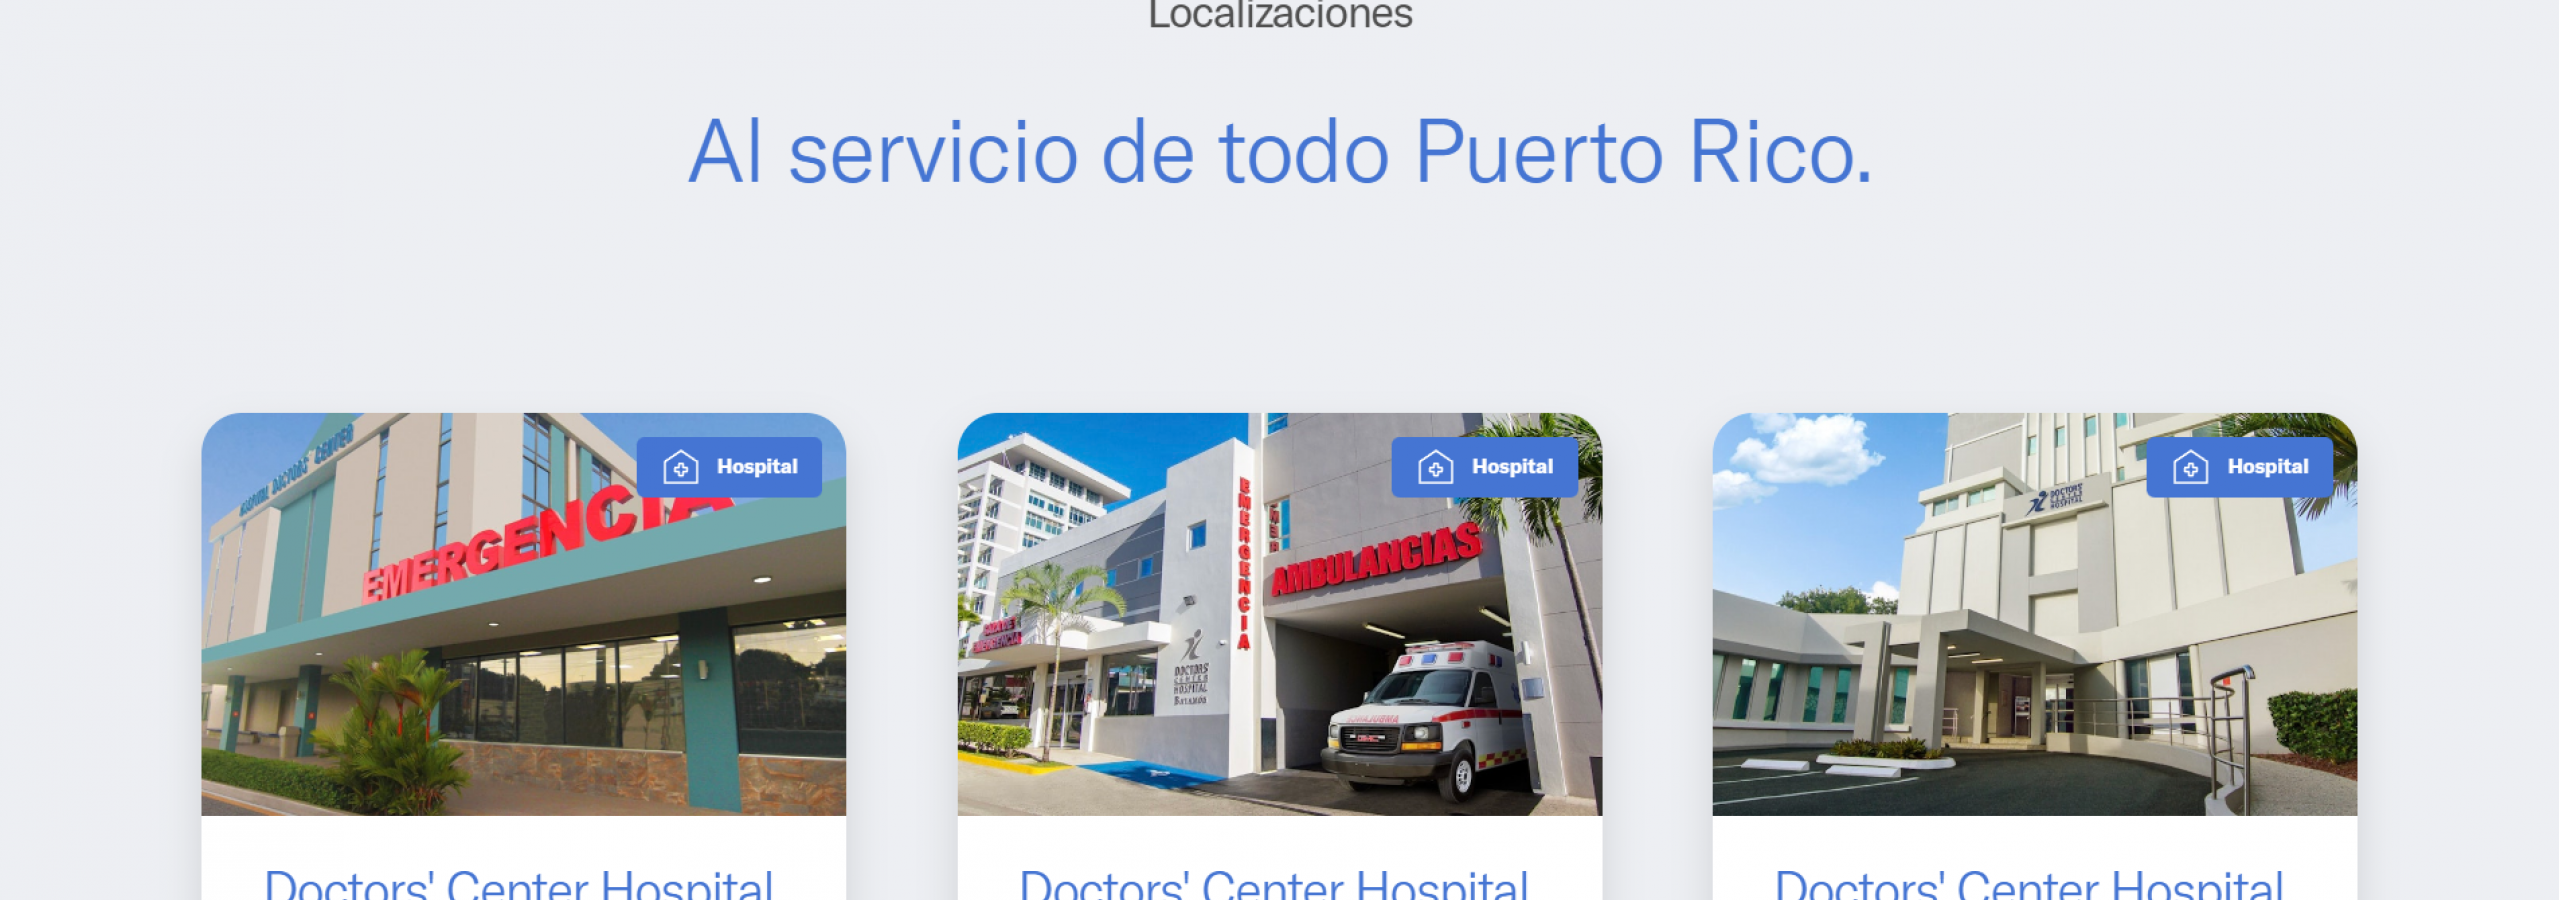 photo of doctors center hospital web site